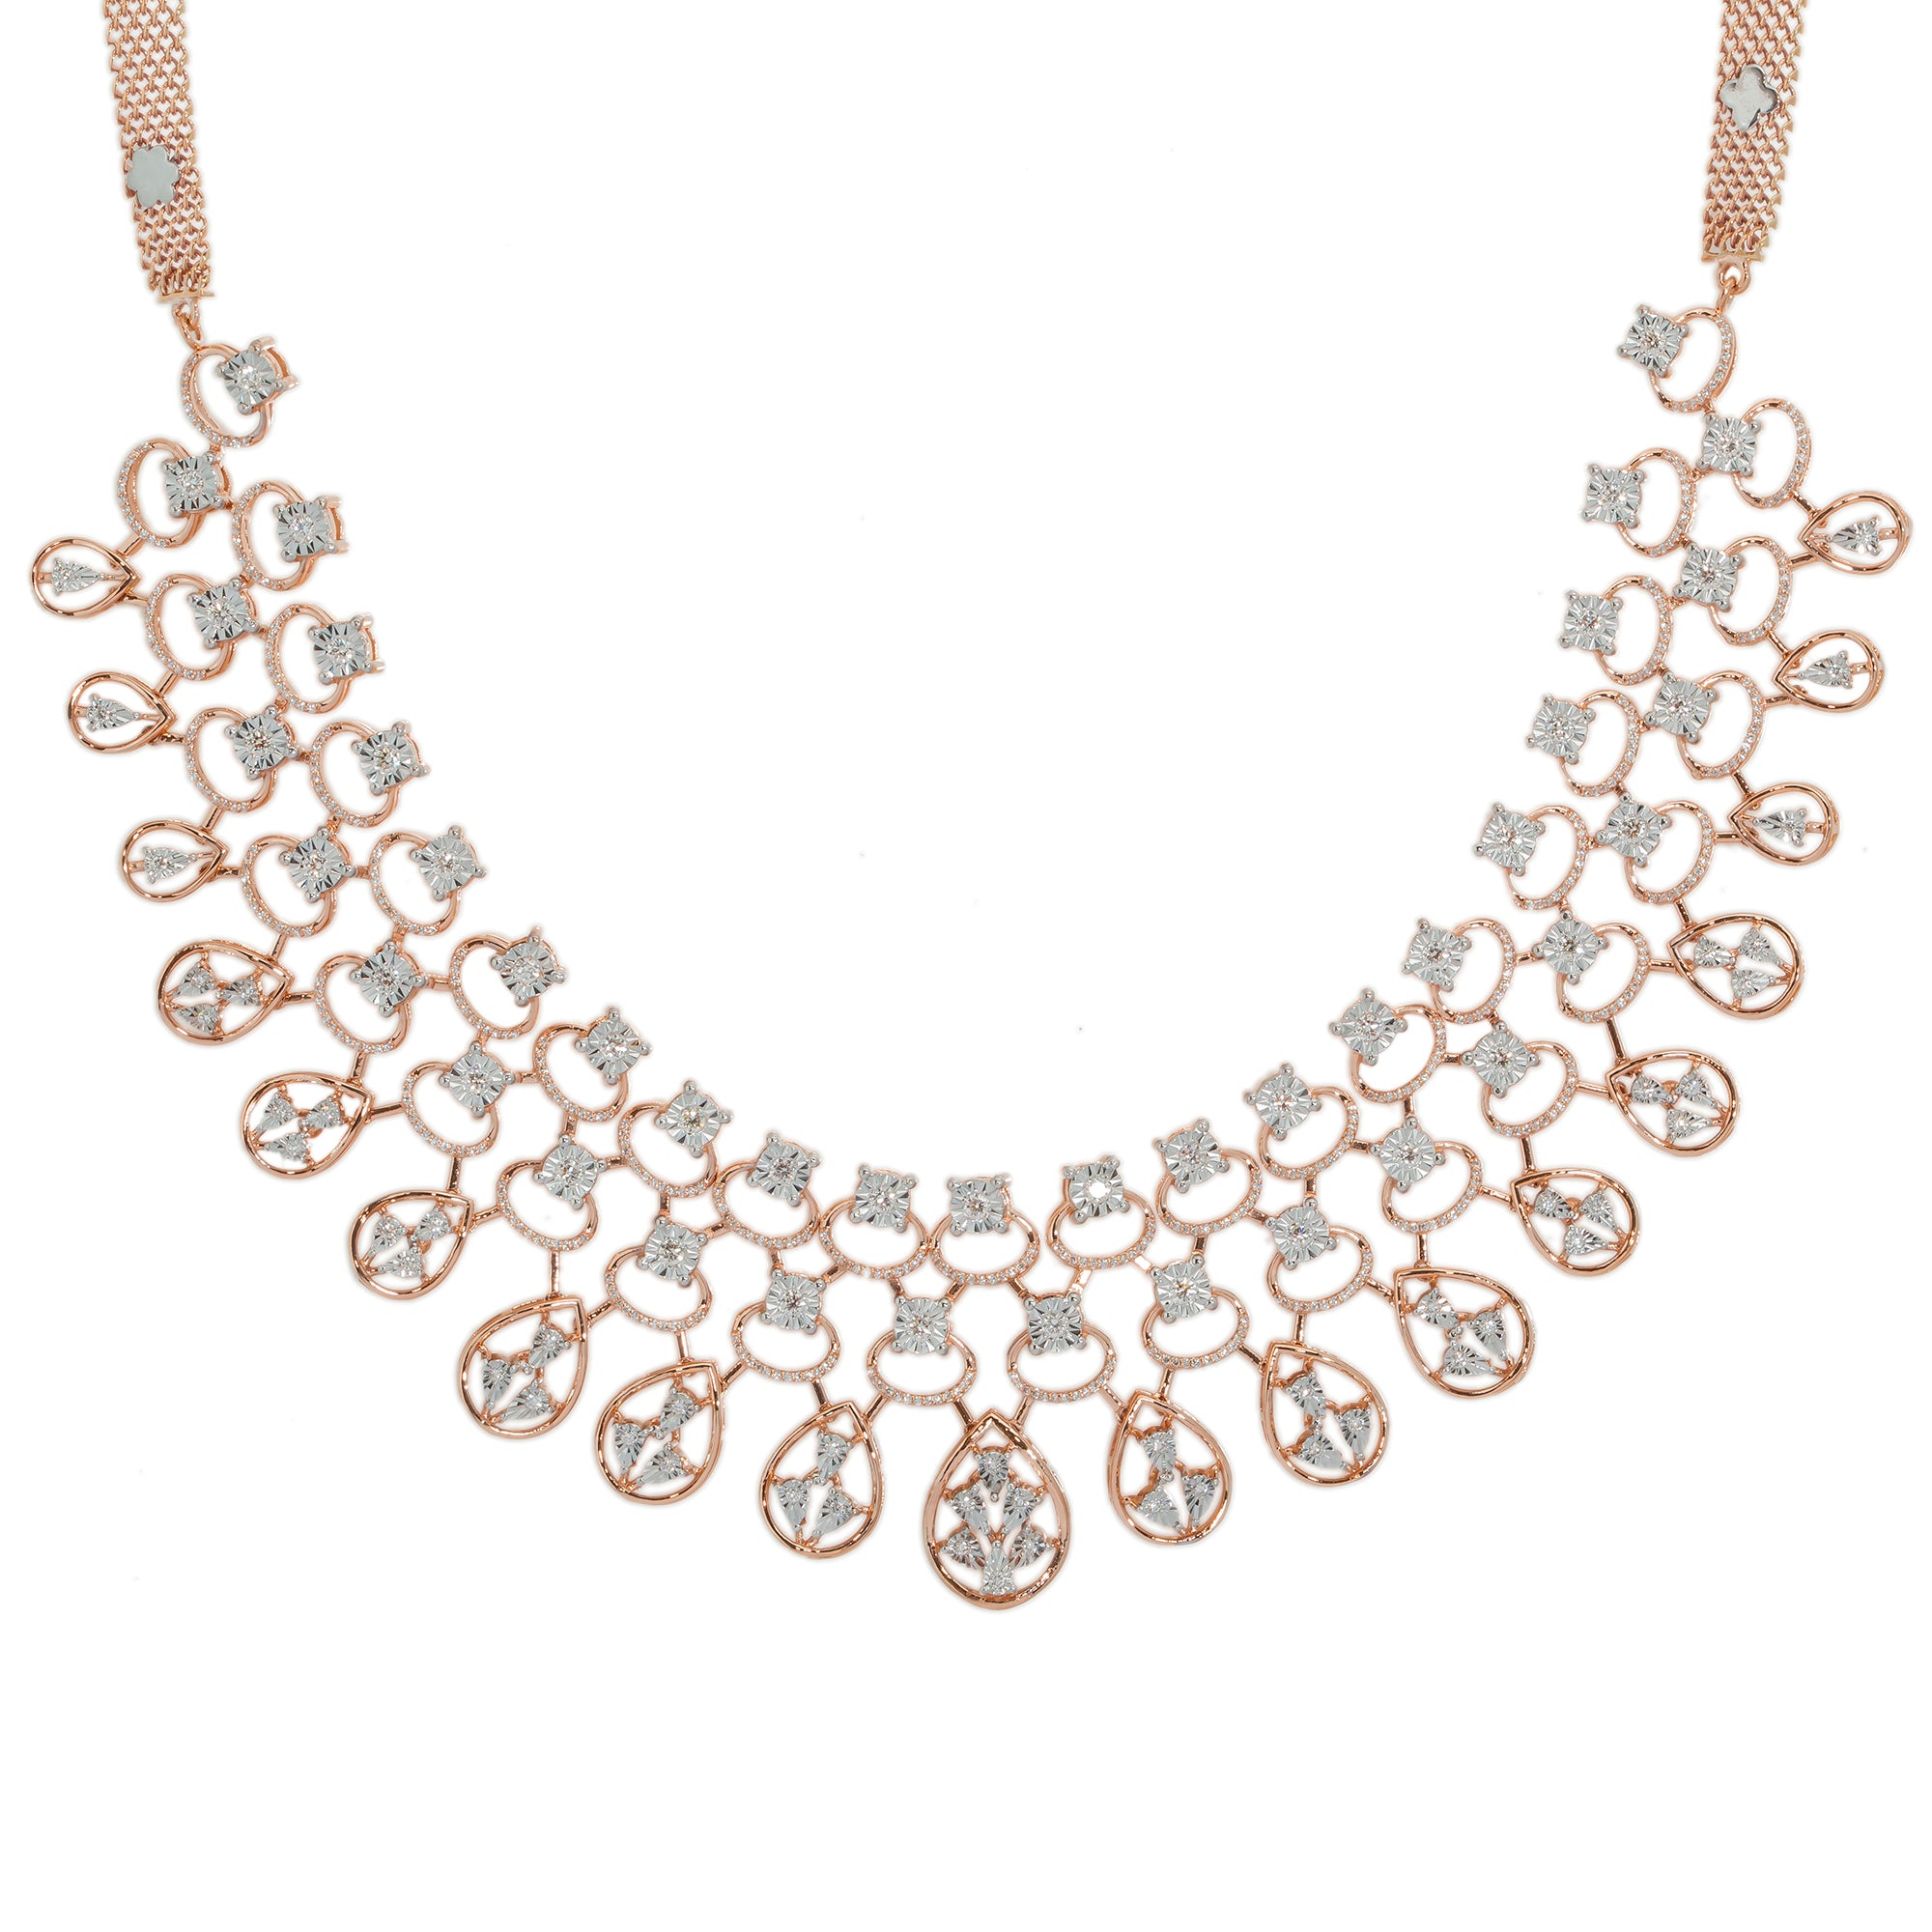 Send Studded Necklace N Earrings Set Gift Online, Rs.445 | FlowerAura